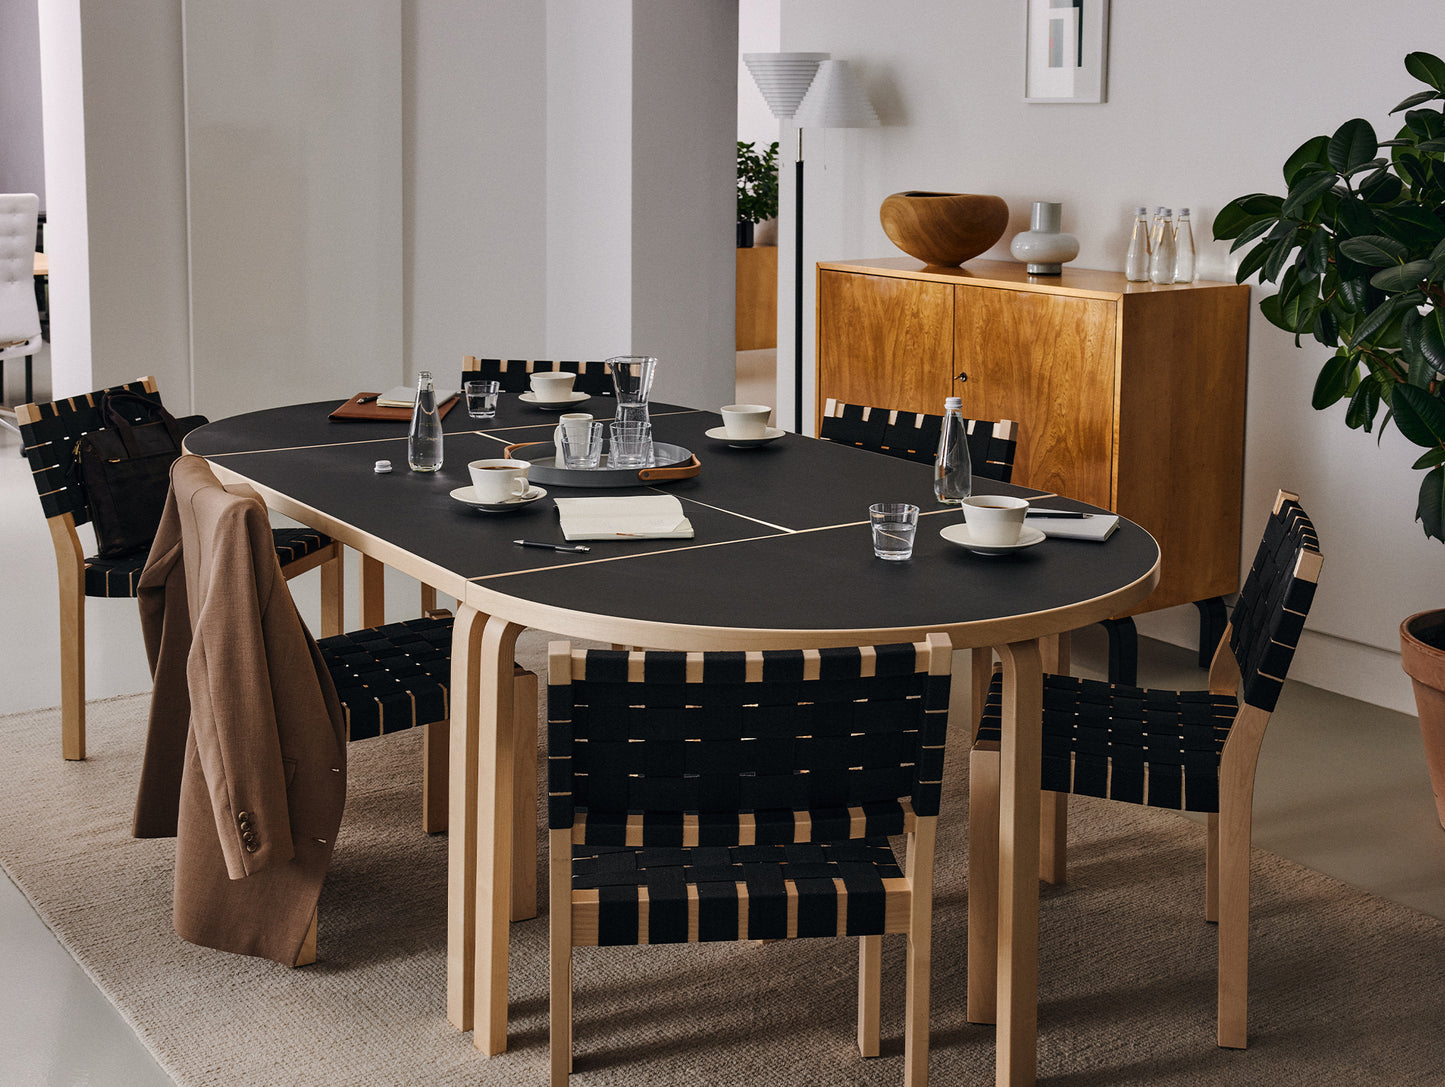 Aalto Table Half-Round by Artek